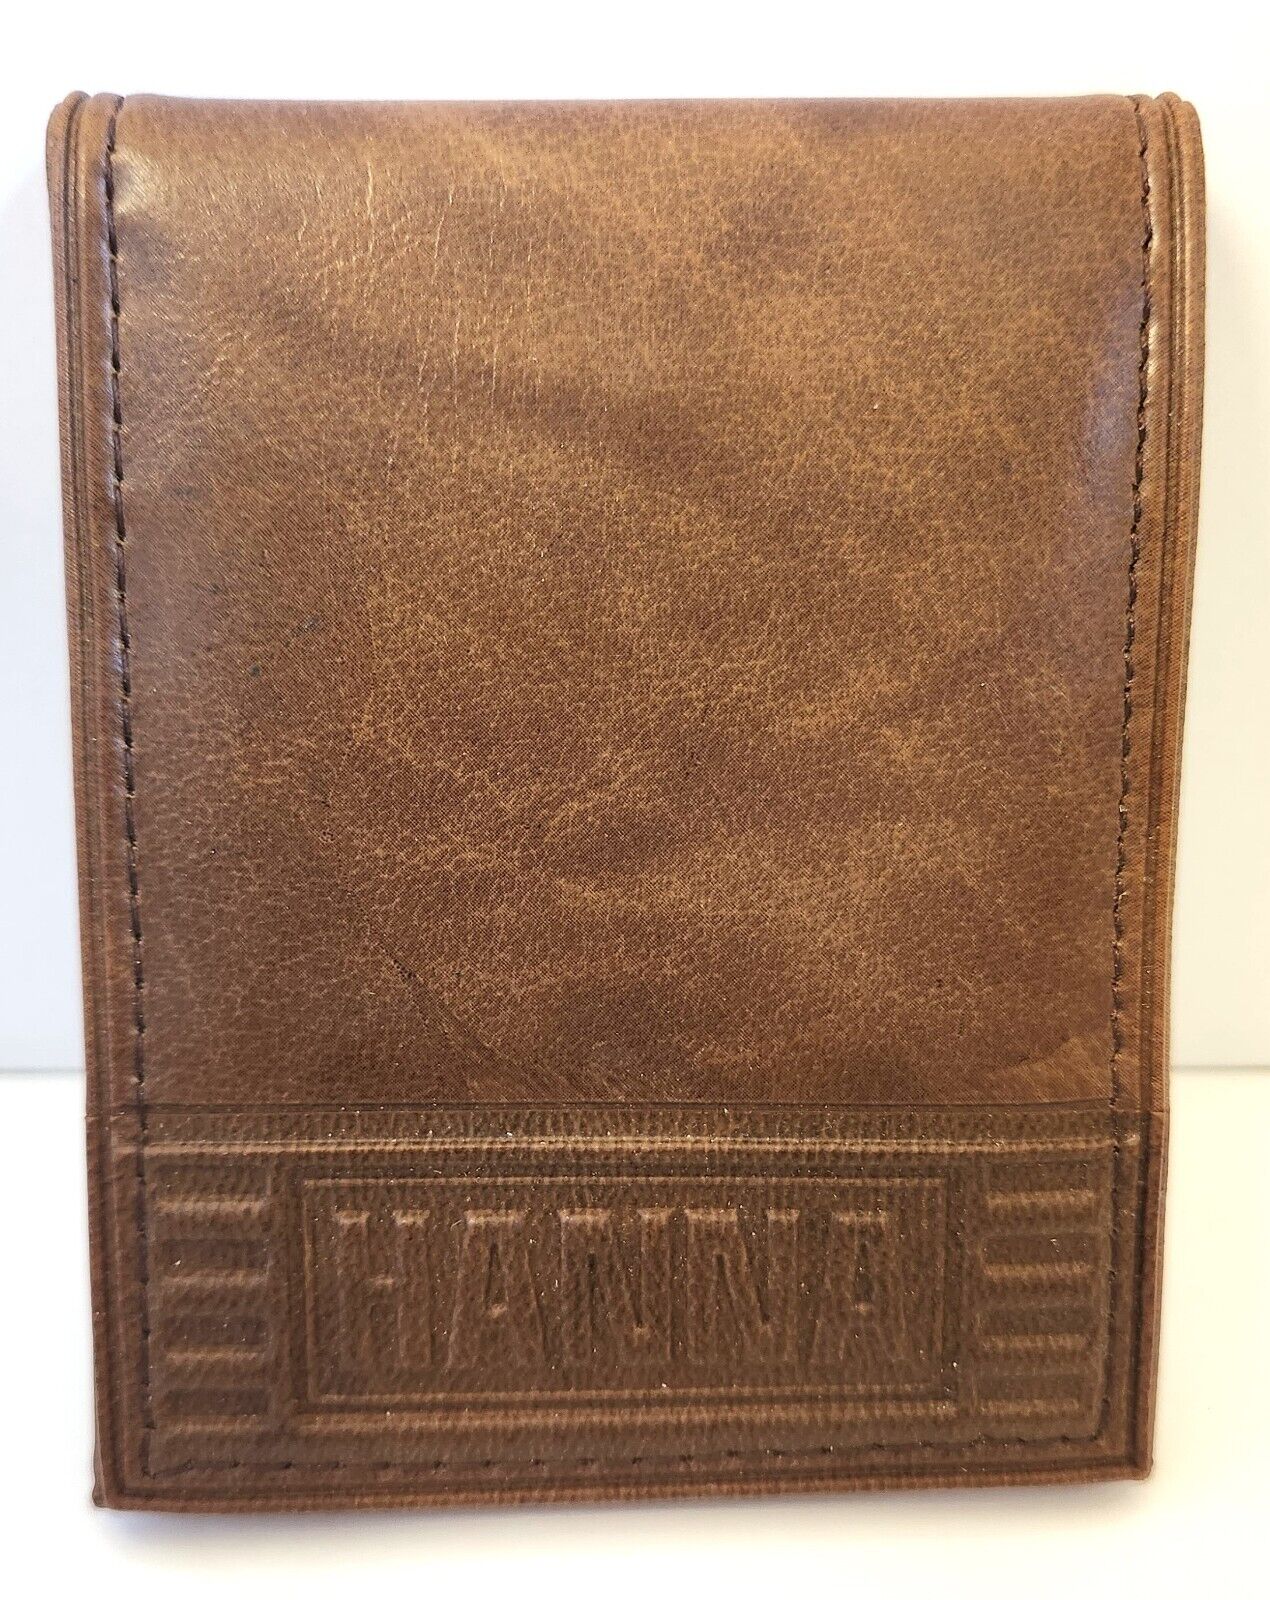 HANNA Nickel Mining Co. Safety Award Wallet NOS Vitron Leather Like Made USA Vtg